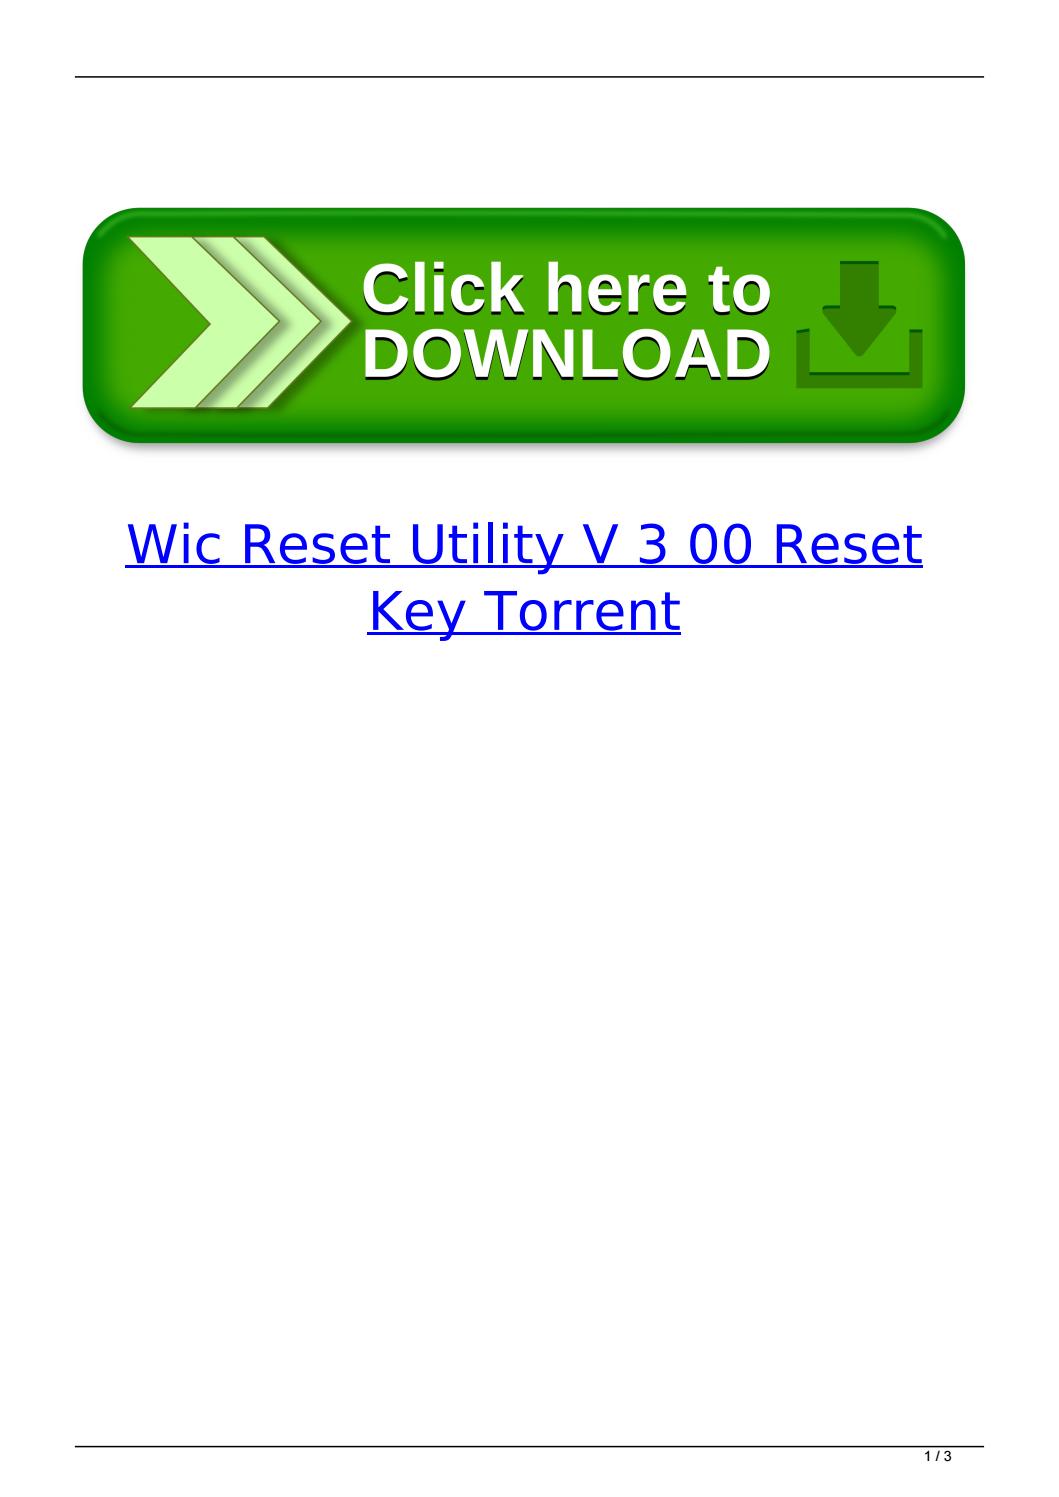 Epson wic reset key generator free download